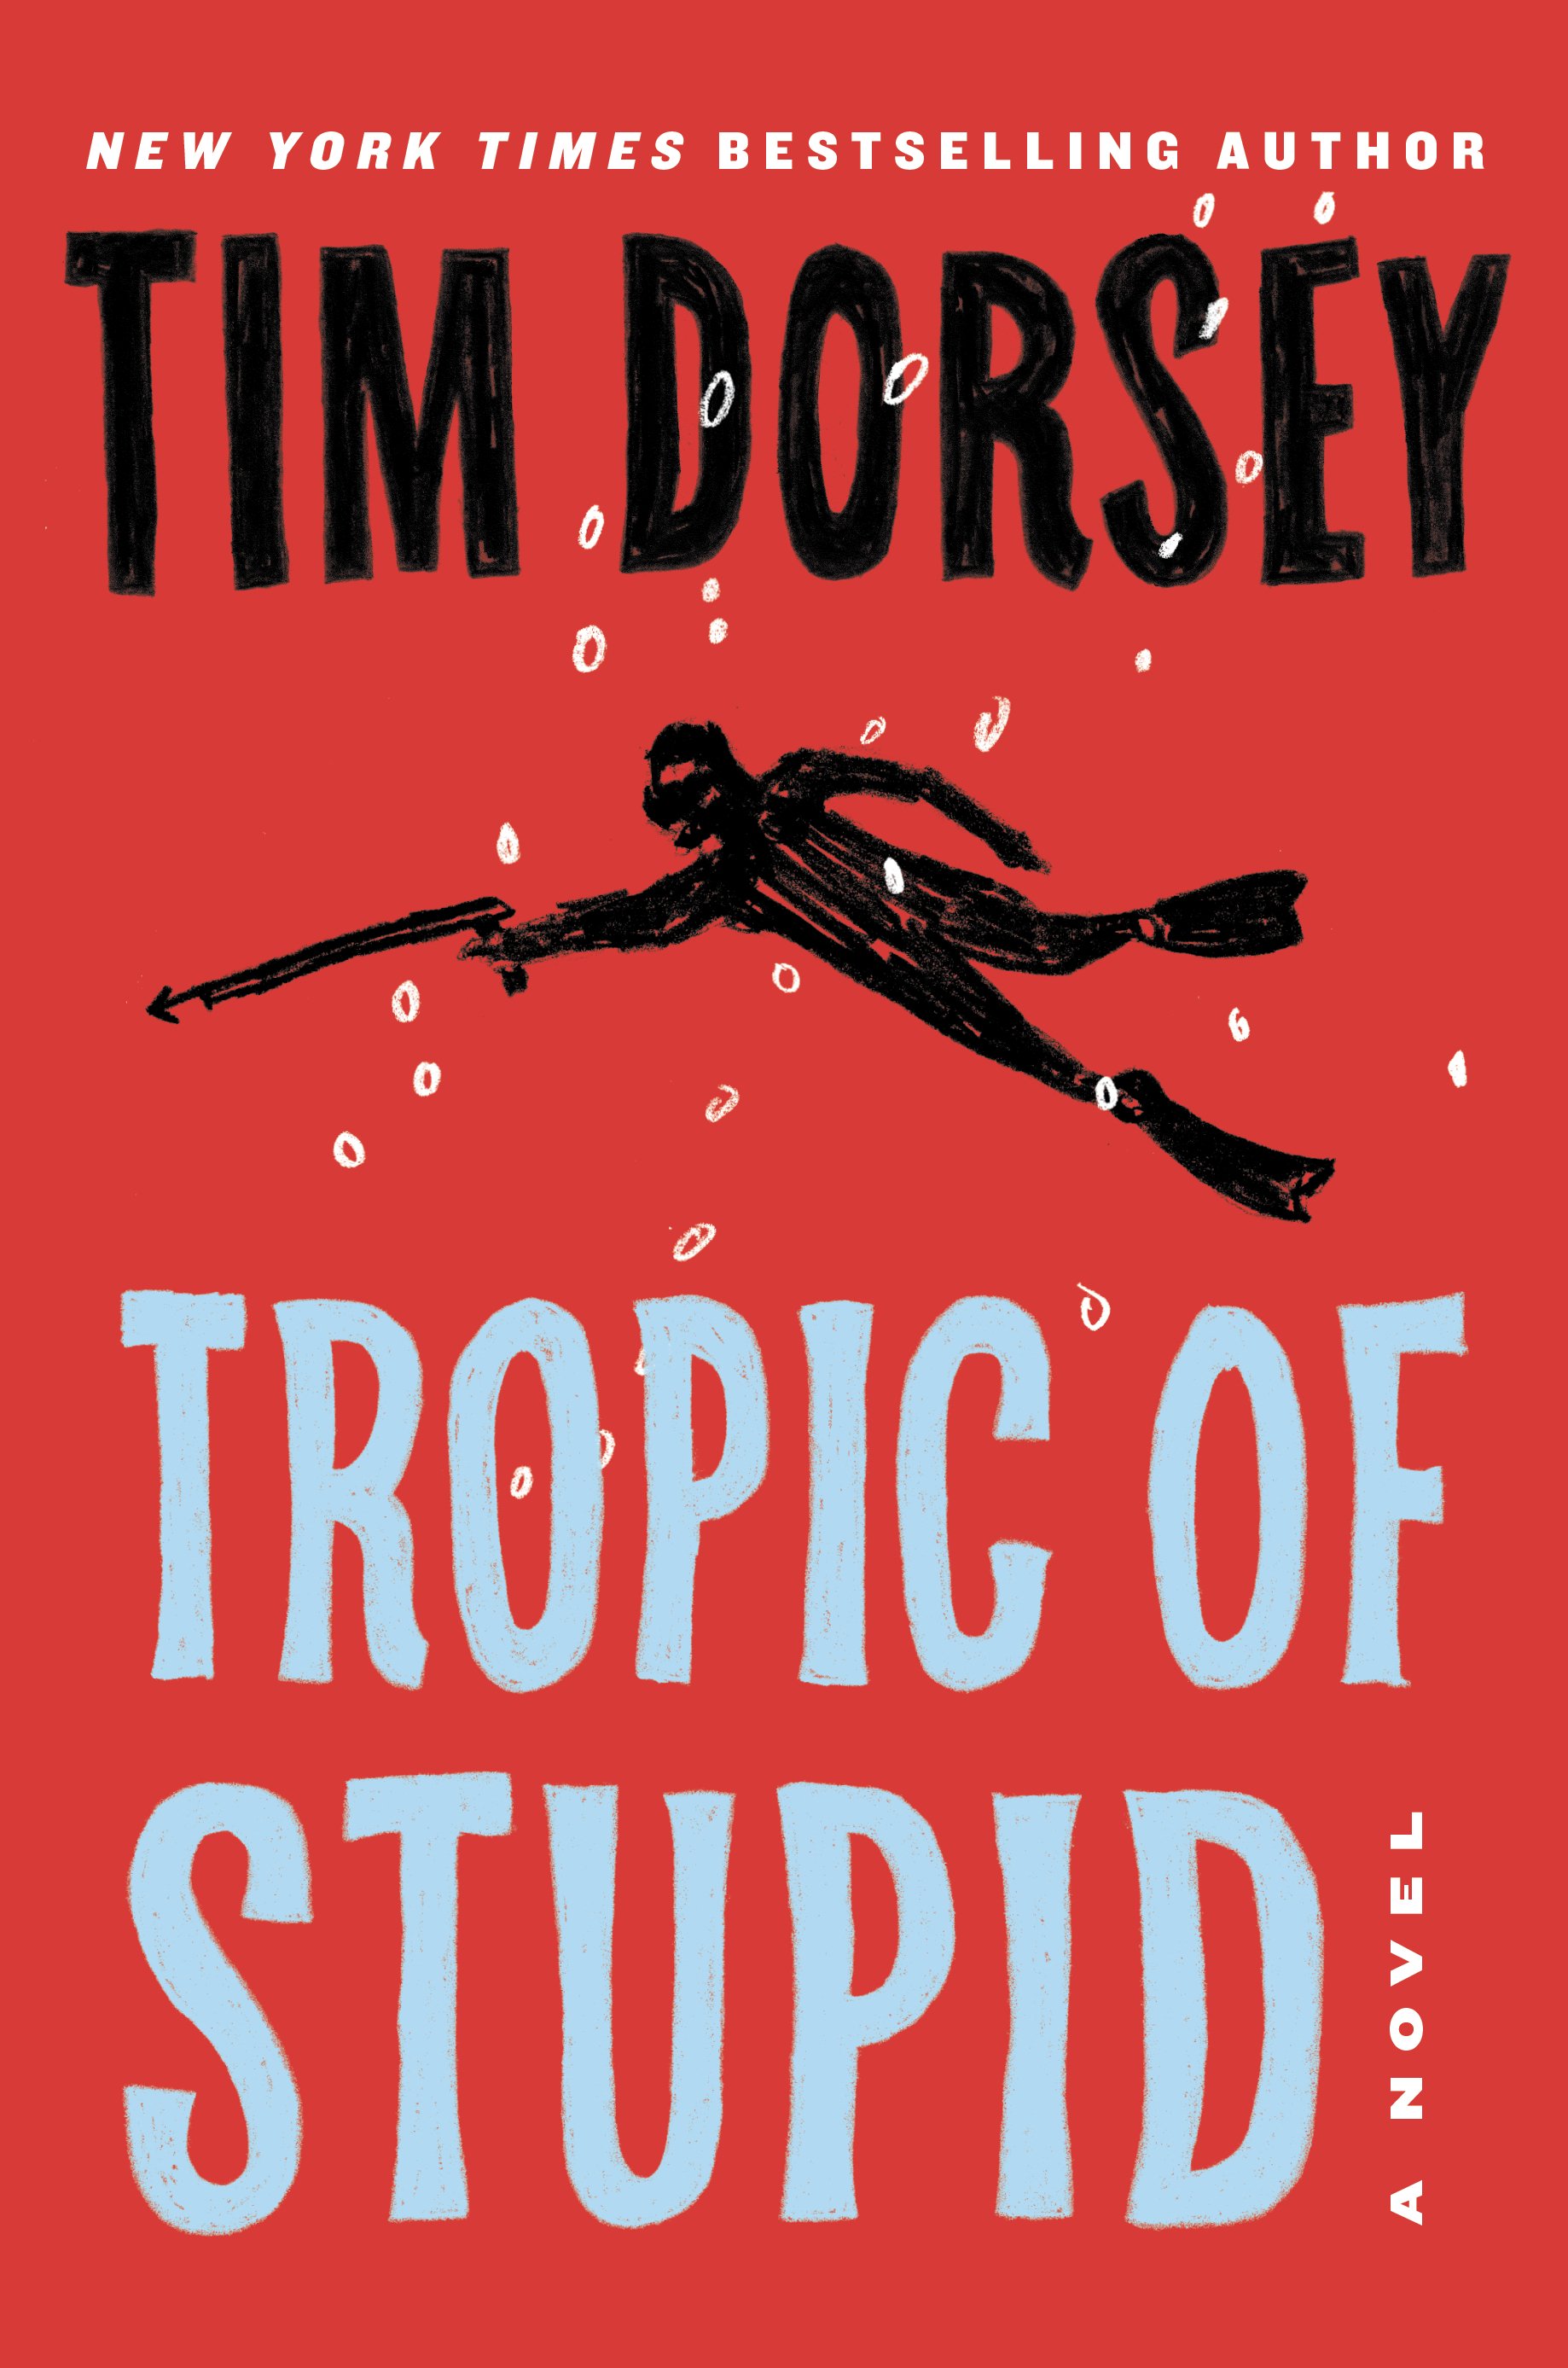 Review: 'Tropic of Stupid' continues slapstick-noir series - Associated Press